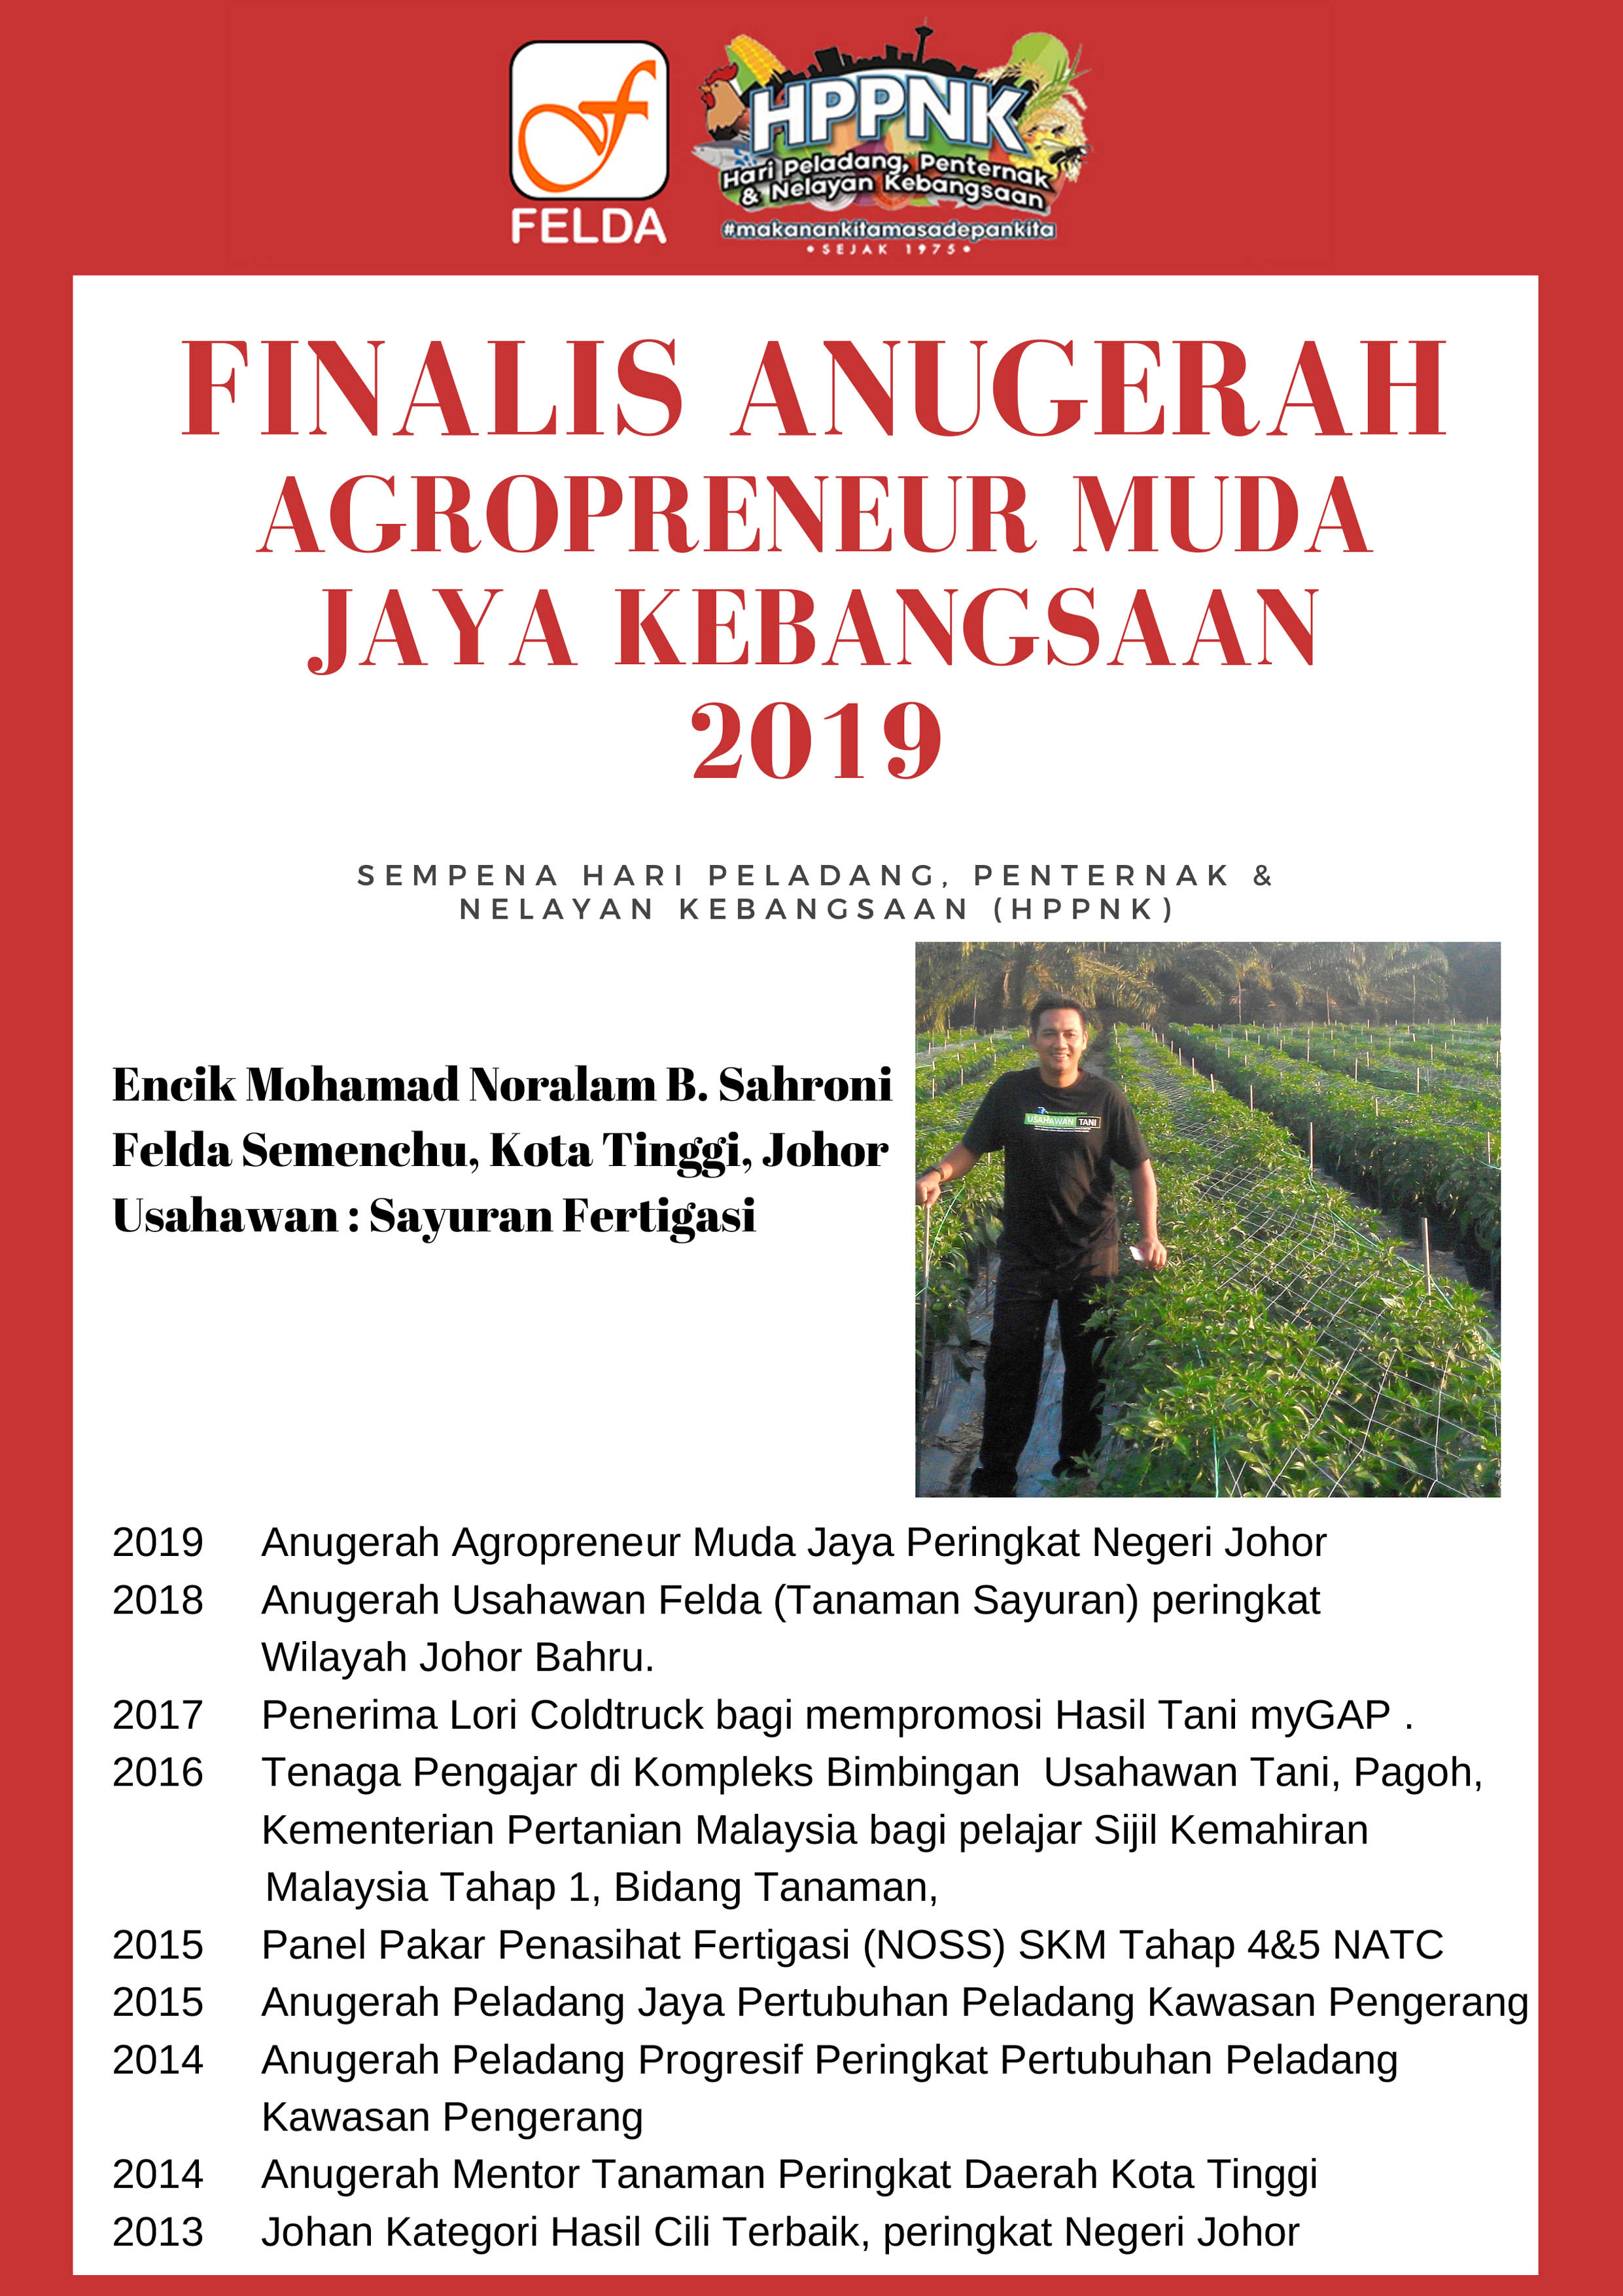 Anugerah Agropreneur Muda Jaya Kebangsaan 2019